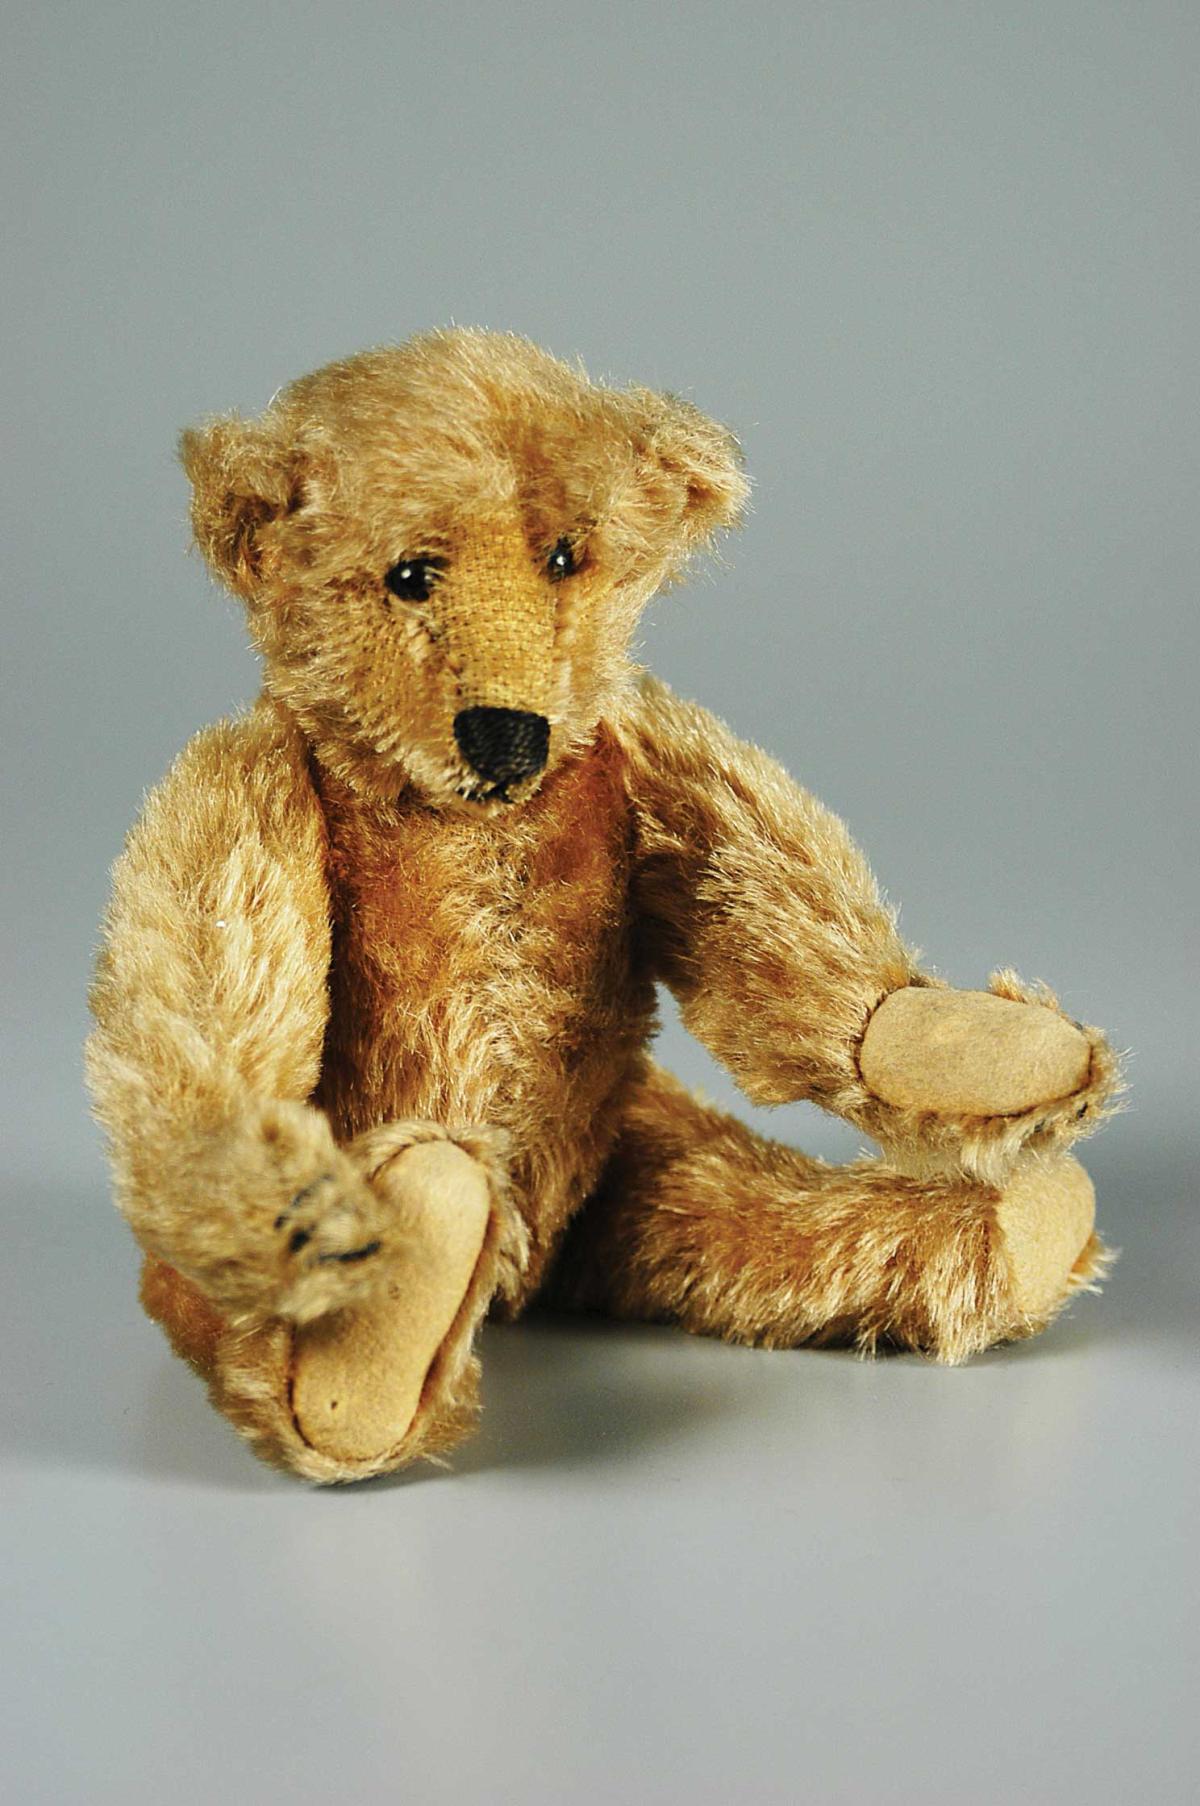 a stuffed brown teddy bear